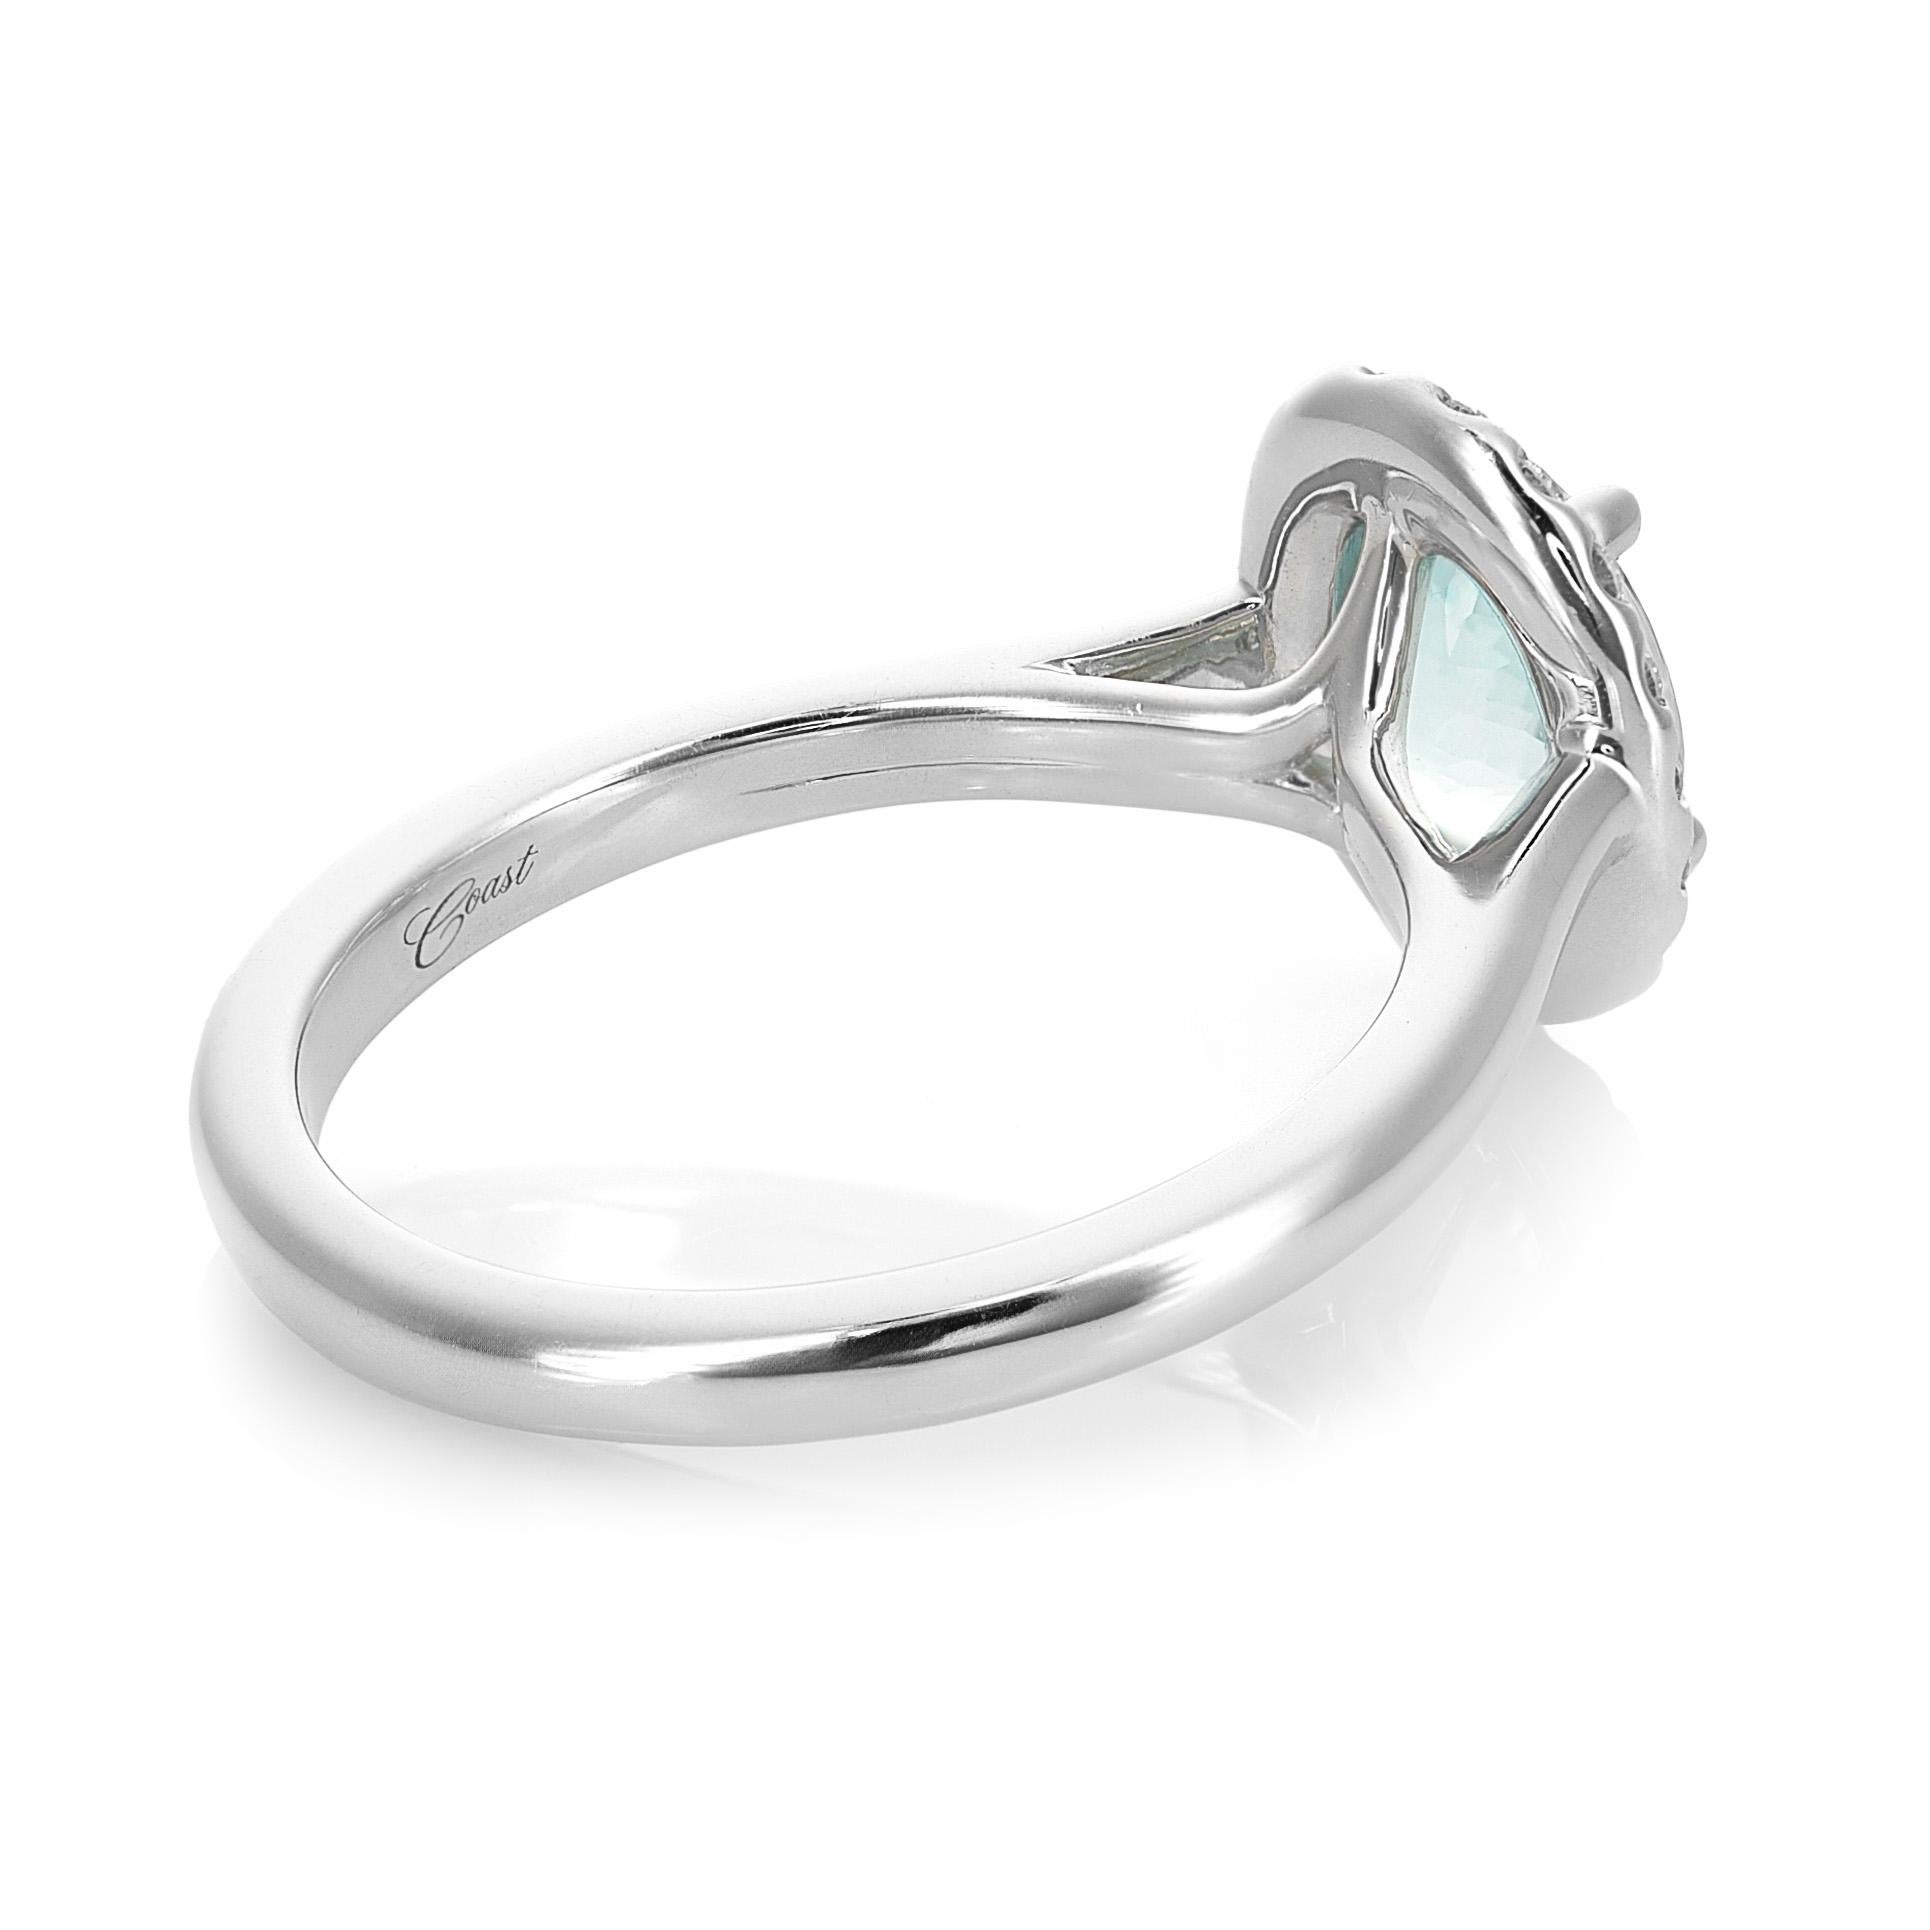 Mixed Cut 0.67 Carats Paraiba Tourmaline Diamonds set in 14K White Gold Ring For Sale